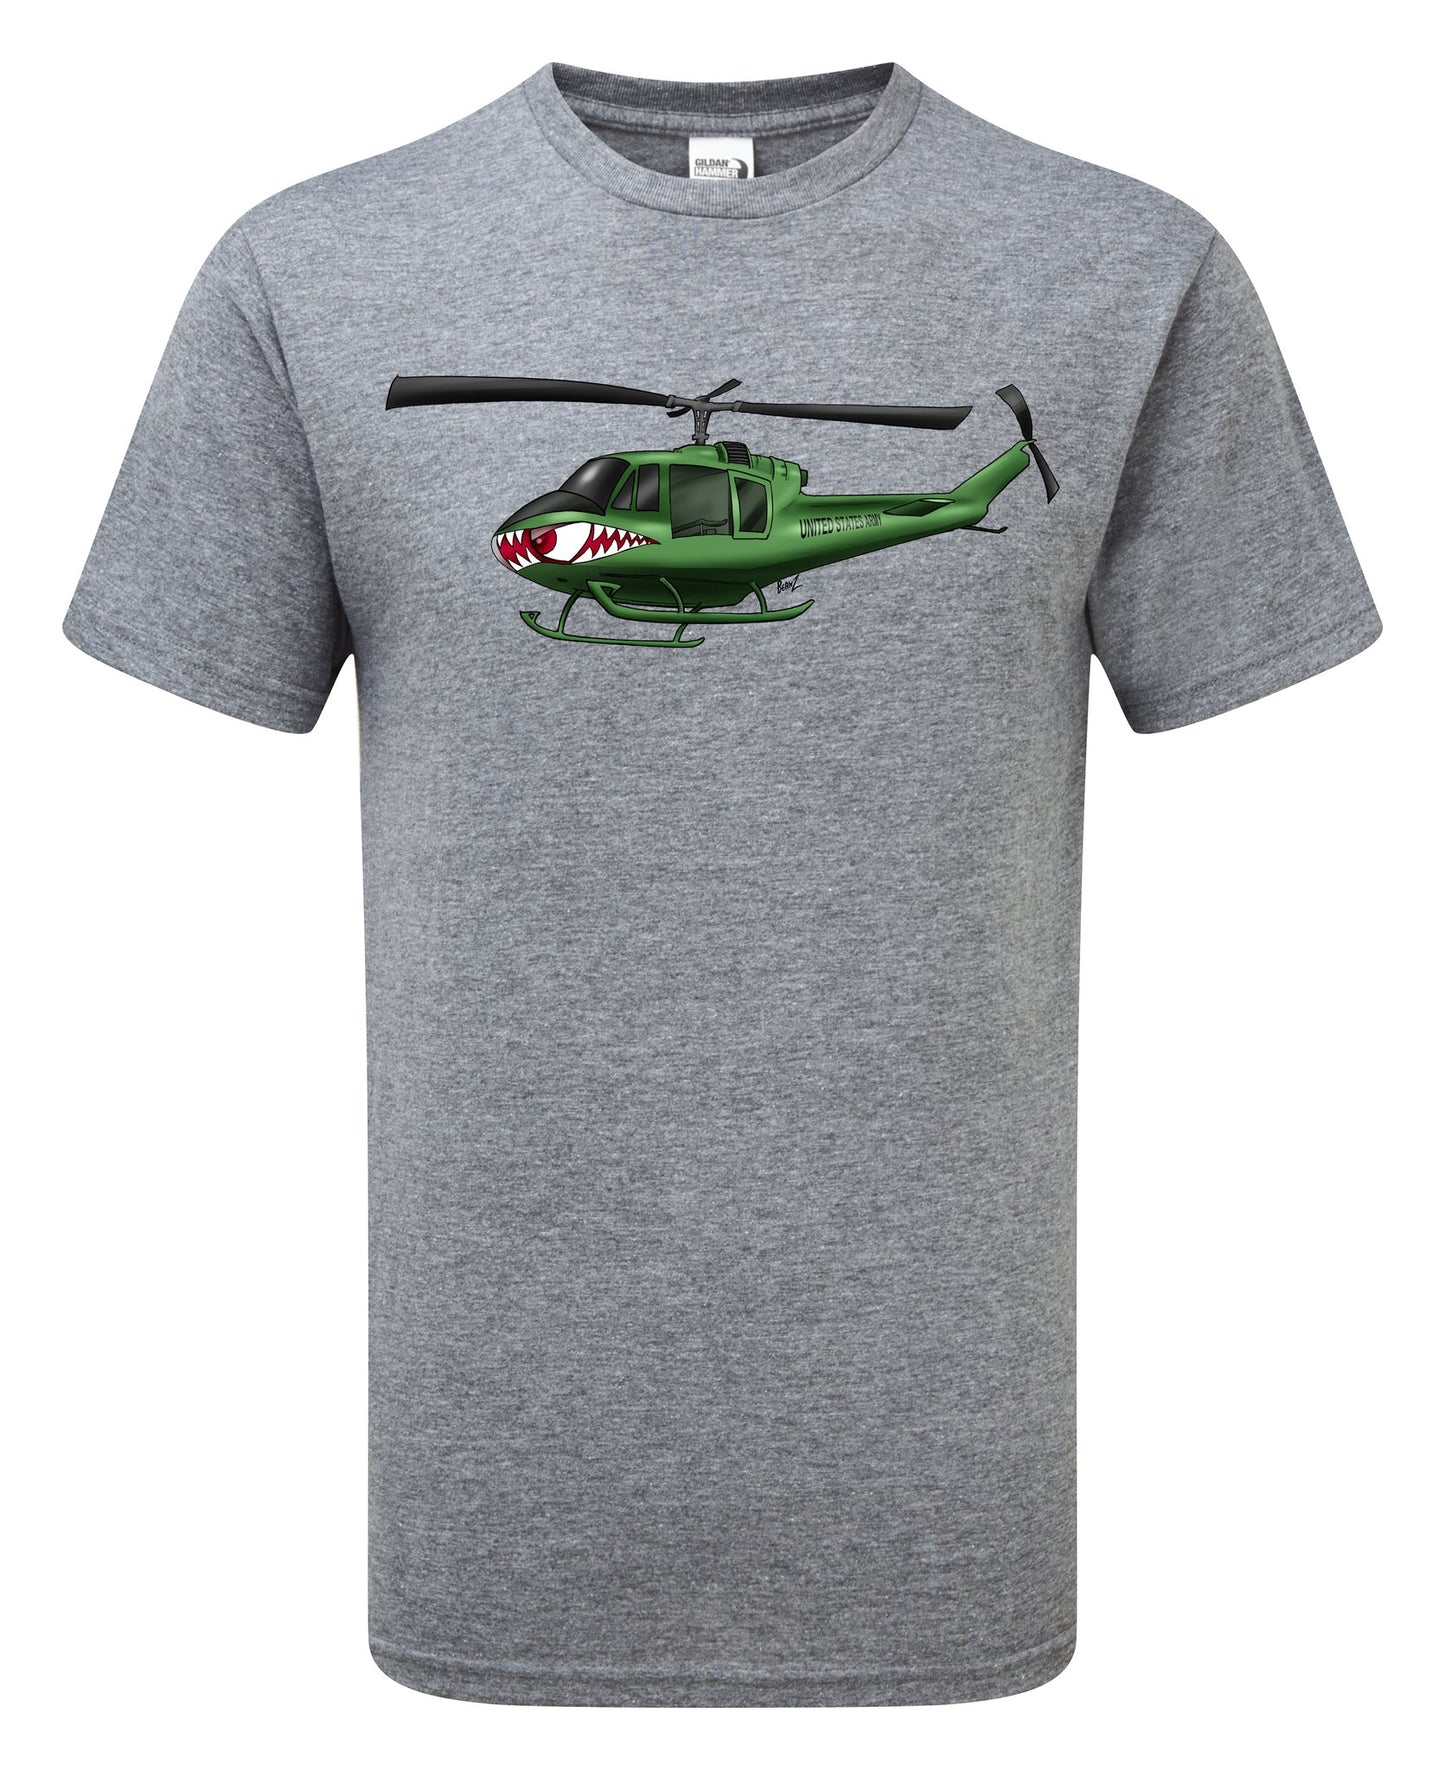 Huey Helicopter Cartoon T-Shirt